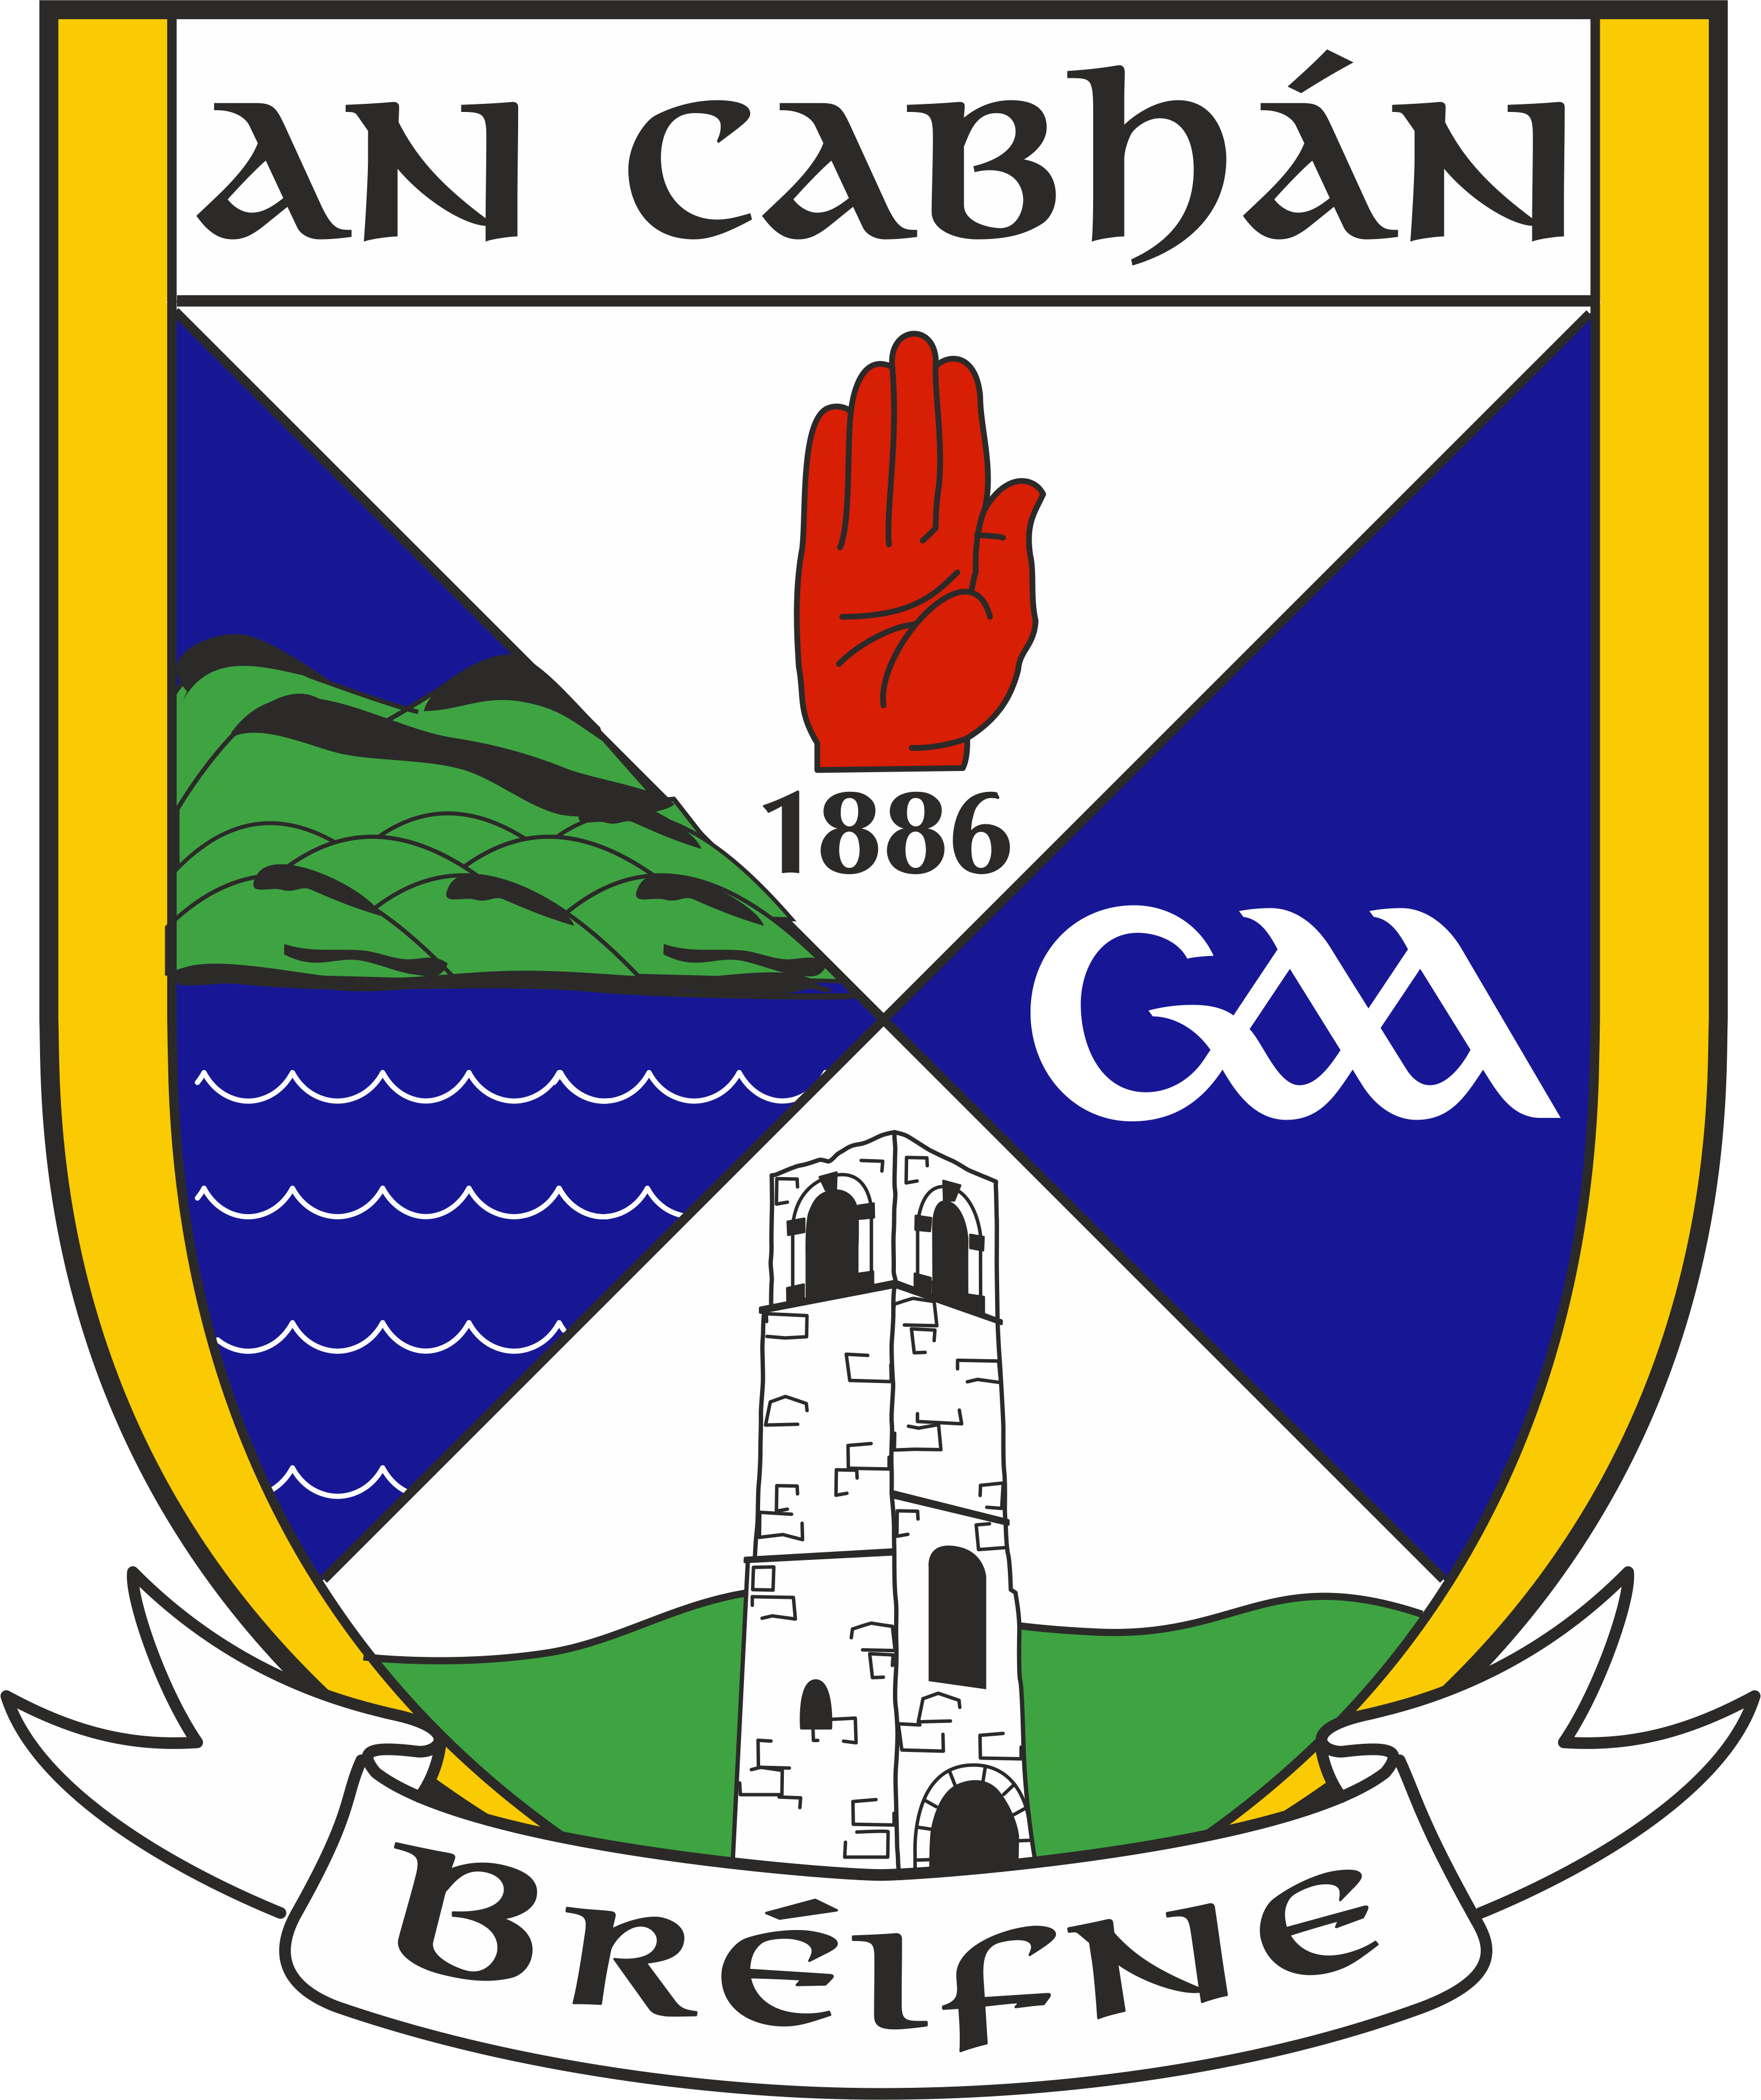 Cavan GAA